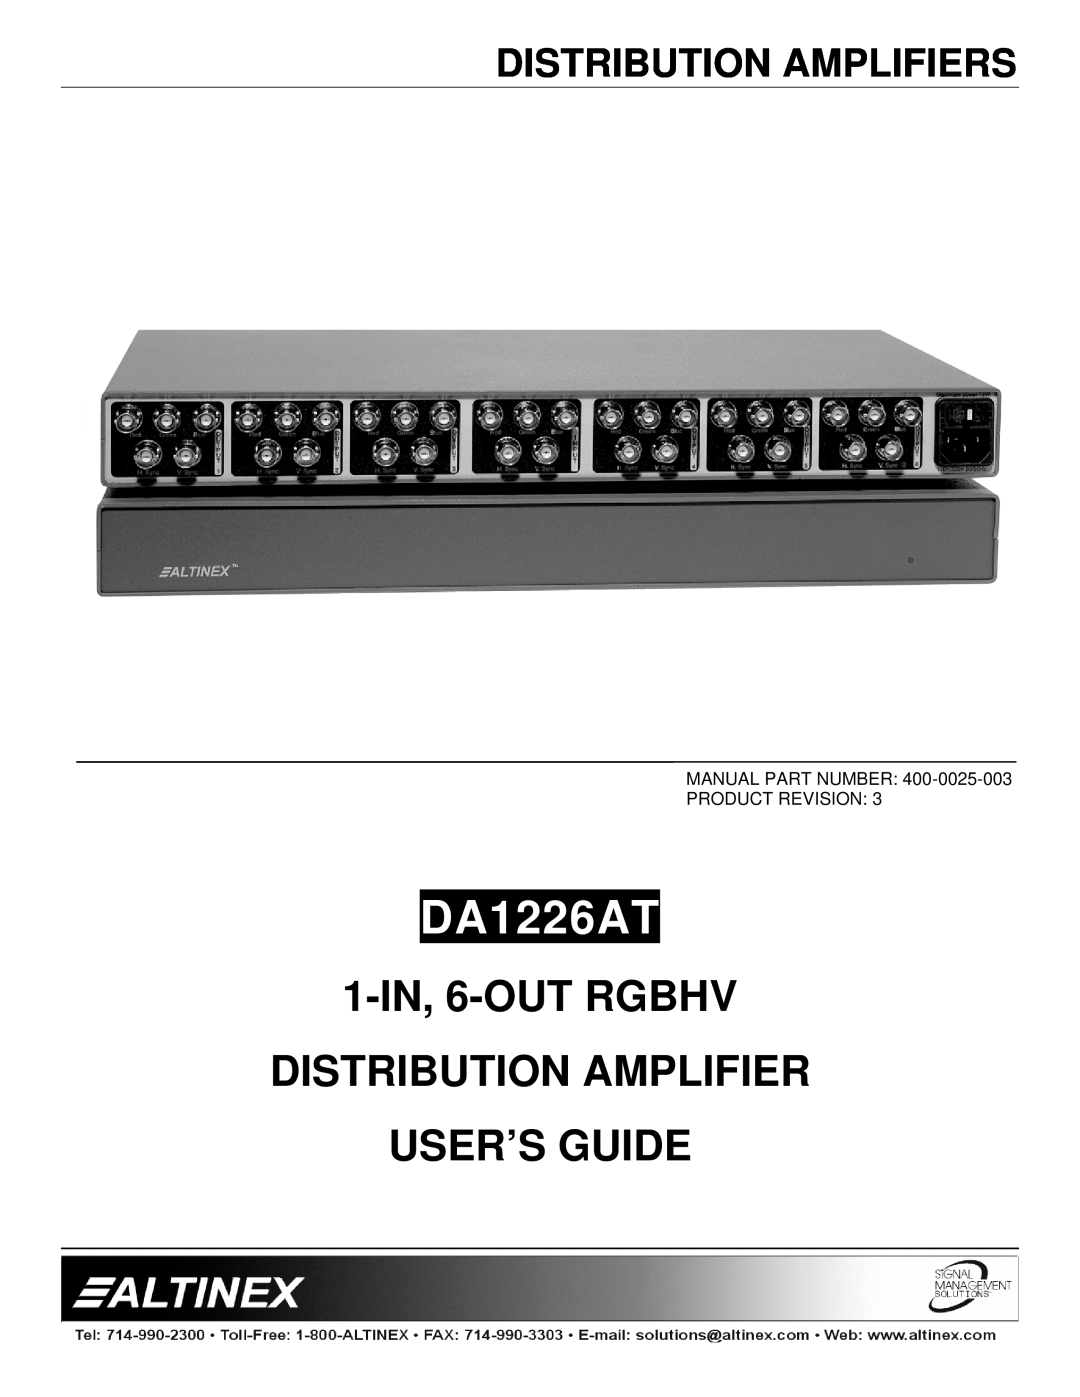 Altinex DA1226AT manual Distribution Amplifiers, 1-IN, 6-OUTRGBHV DISTRIBUTION AMPLIFIER, User’S Guide 